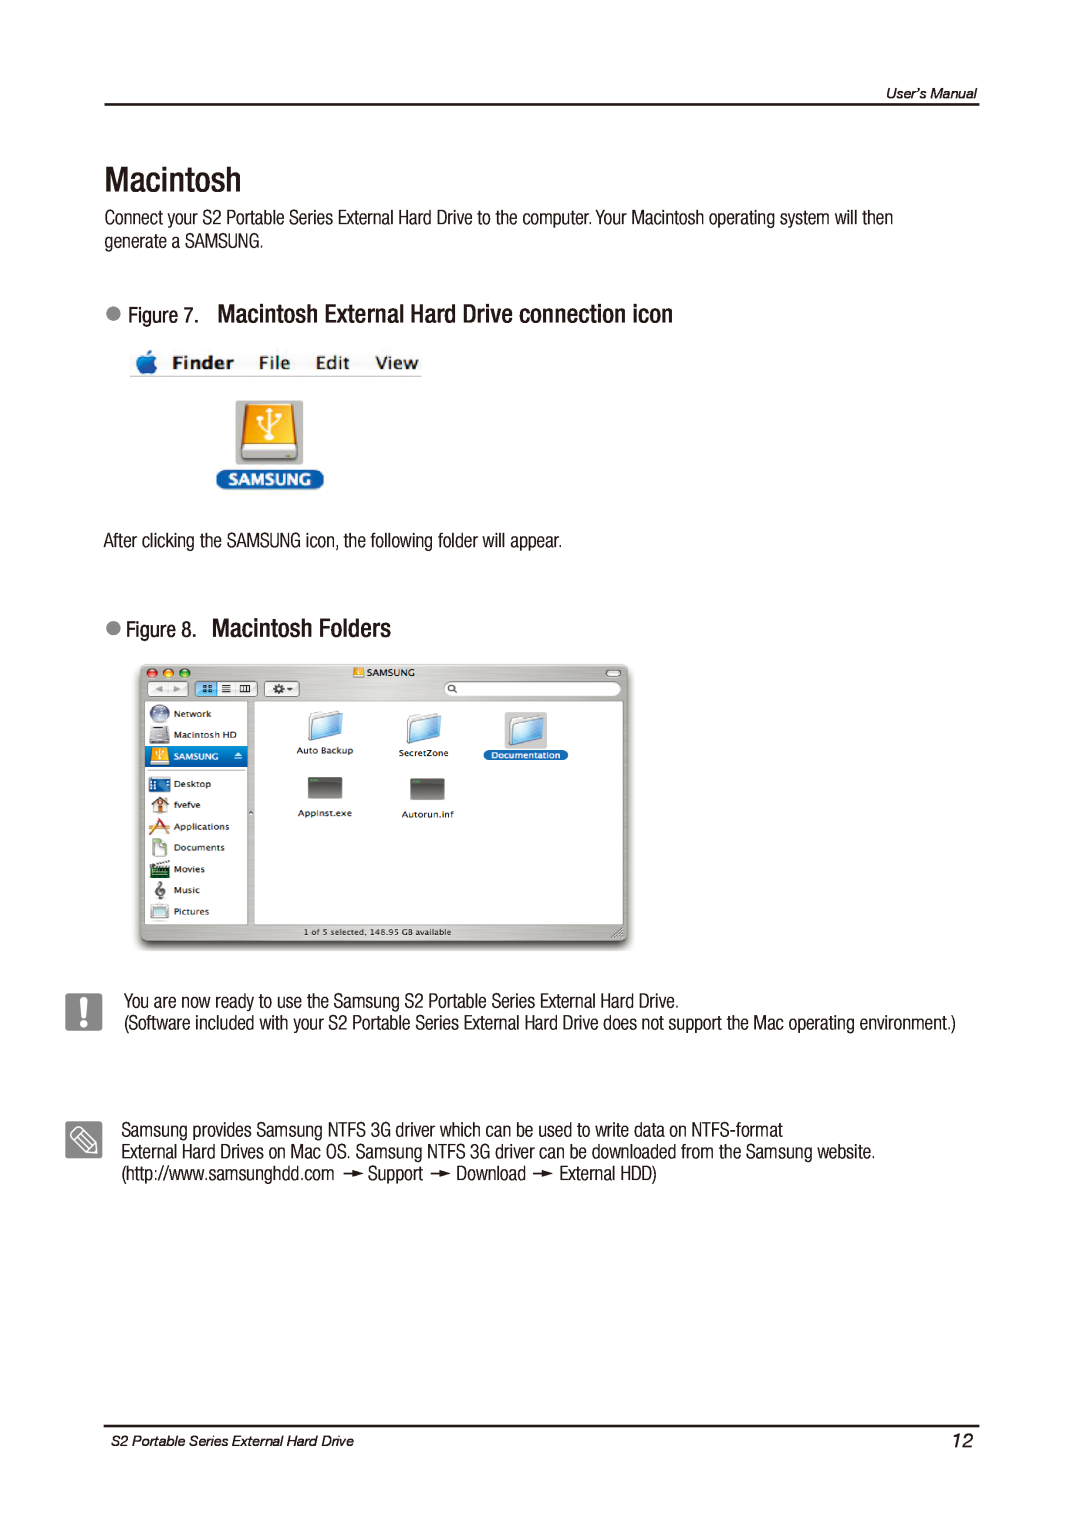 Samsung HXMU016DA, S2 PORTABLE 3.0 user manual Macintosh External Hard Drive connection icon, Macintosh Folders 